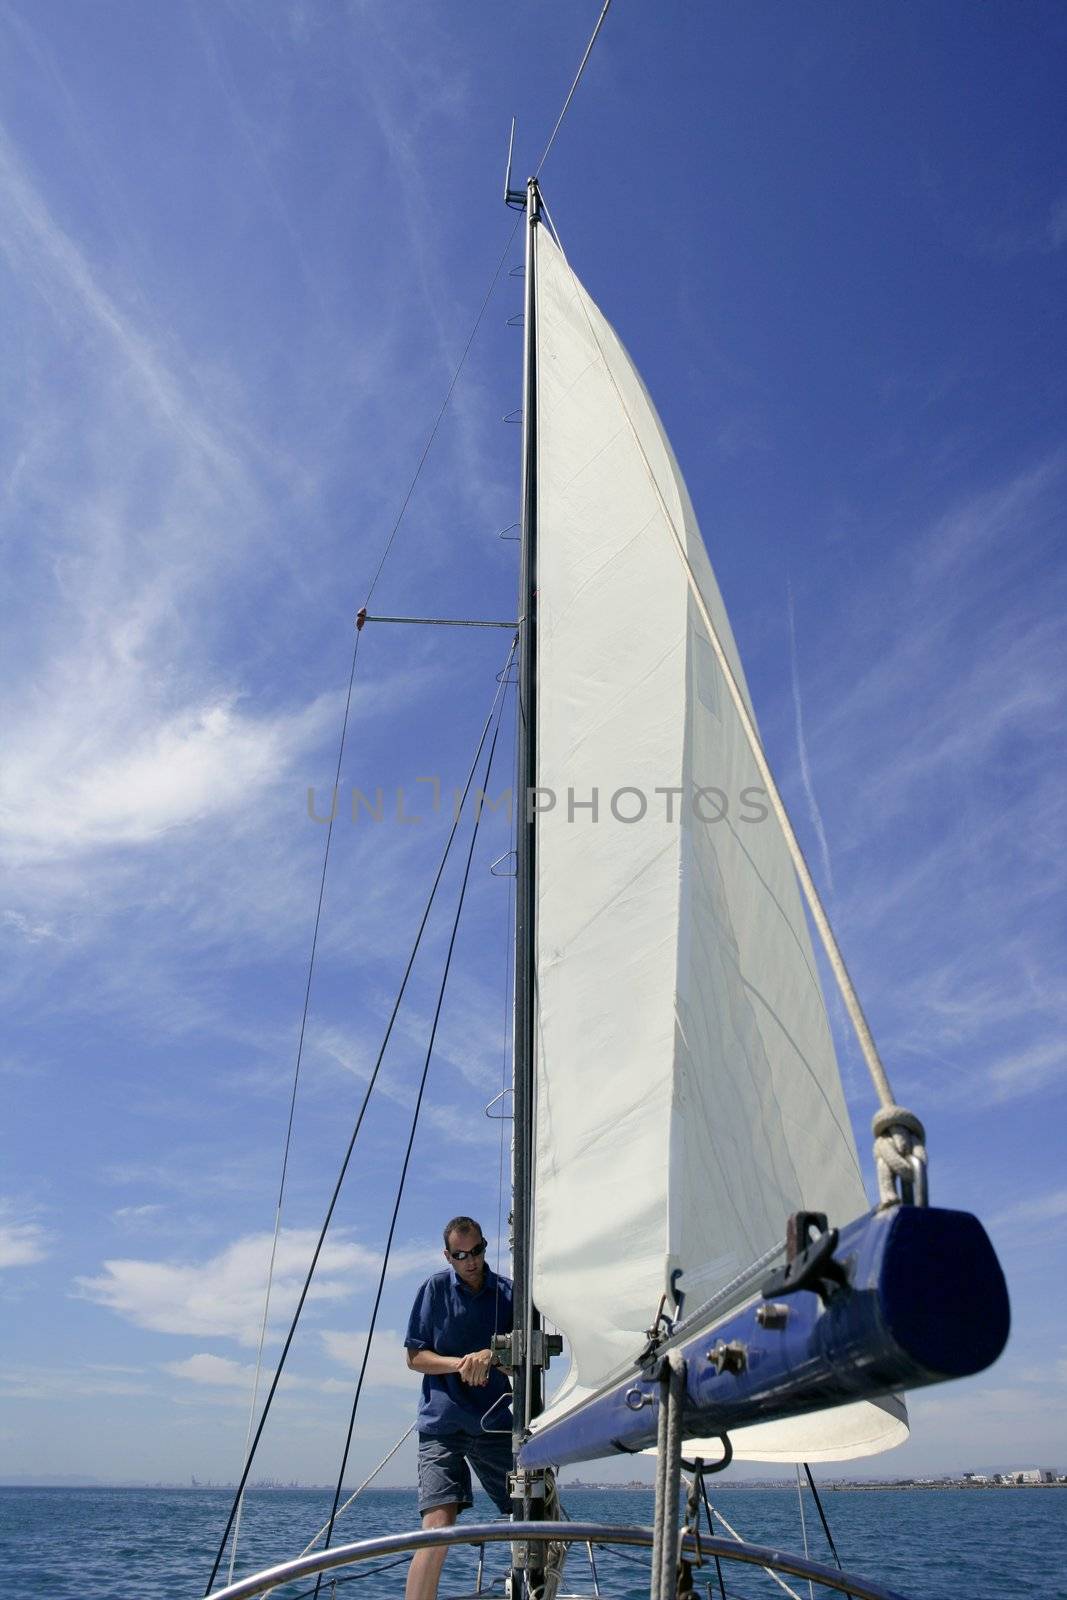 Sailor in sailboat rigging the sails by lunamarina